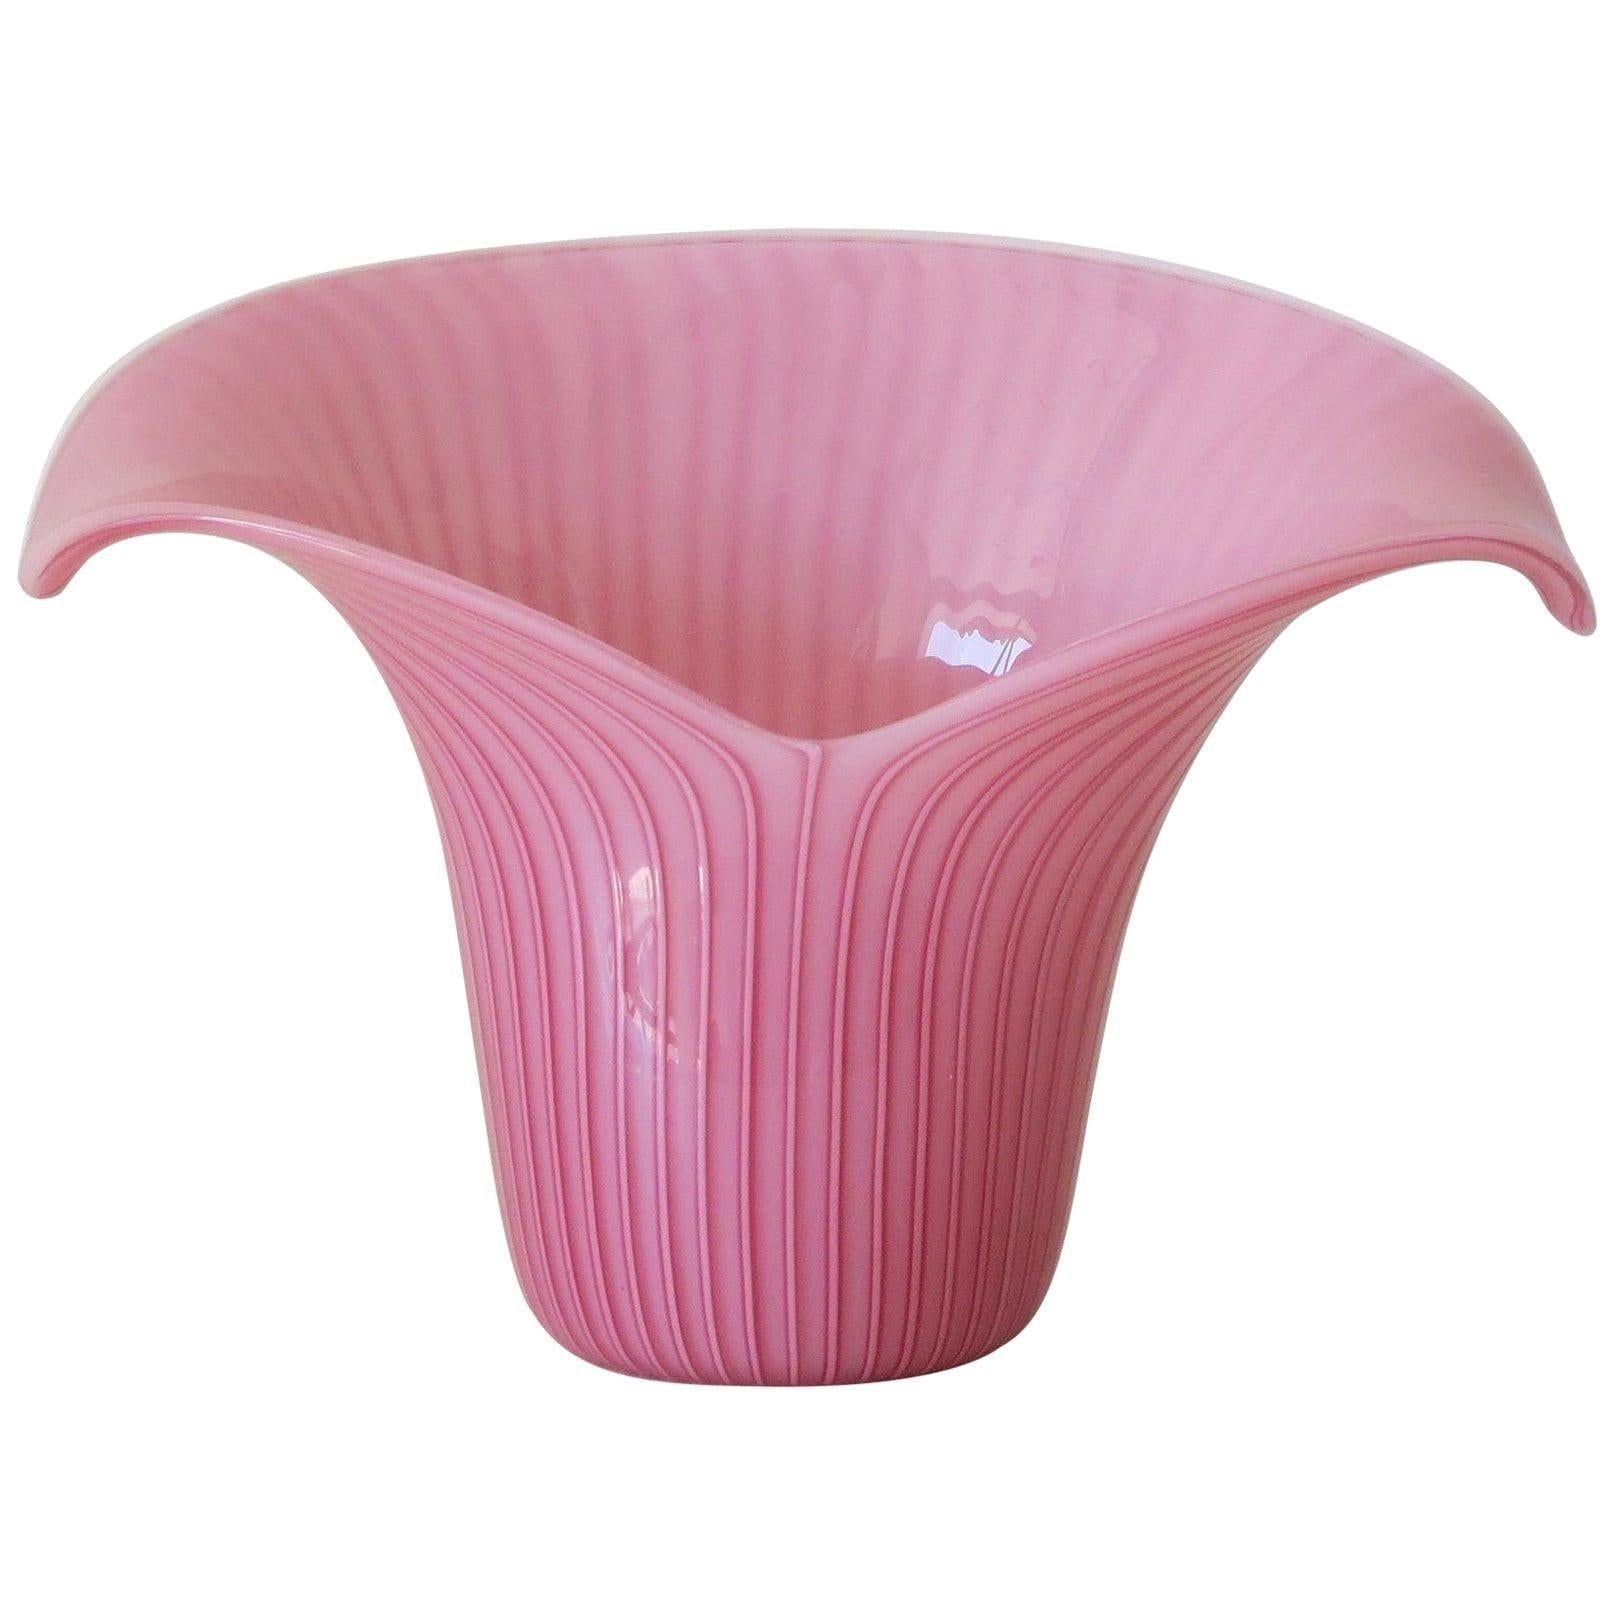 Vintage Italian table lamps in striped pink Murano glass blown in Incamiciato technique. Designed by Venini, c. 1960's. 
 
Made in Italy.
 
Dimensions:
 
9.5